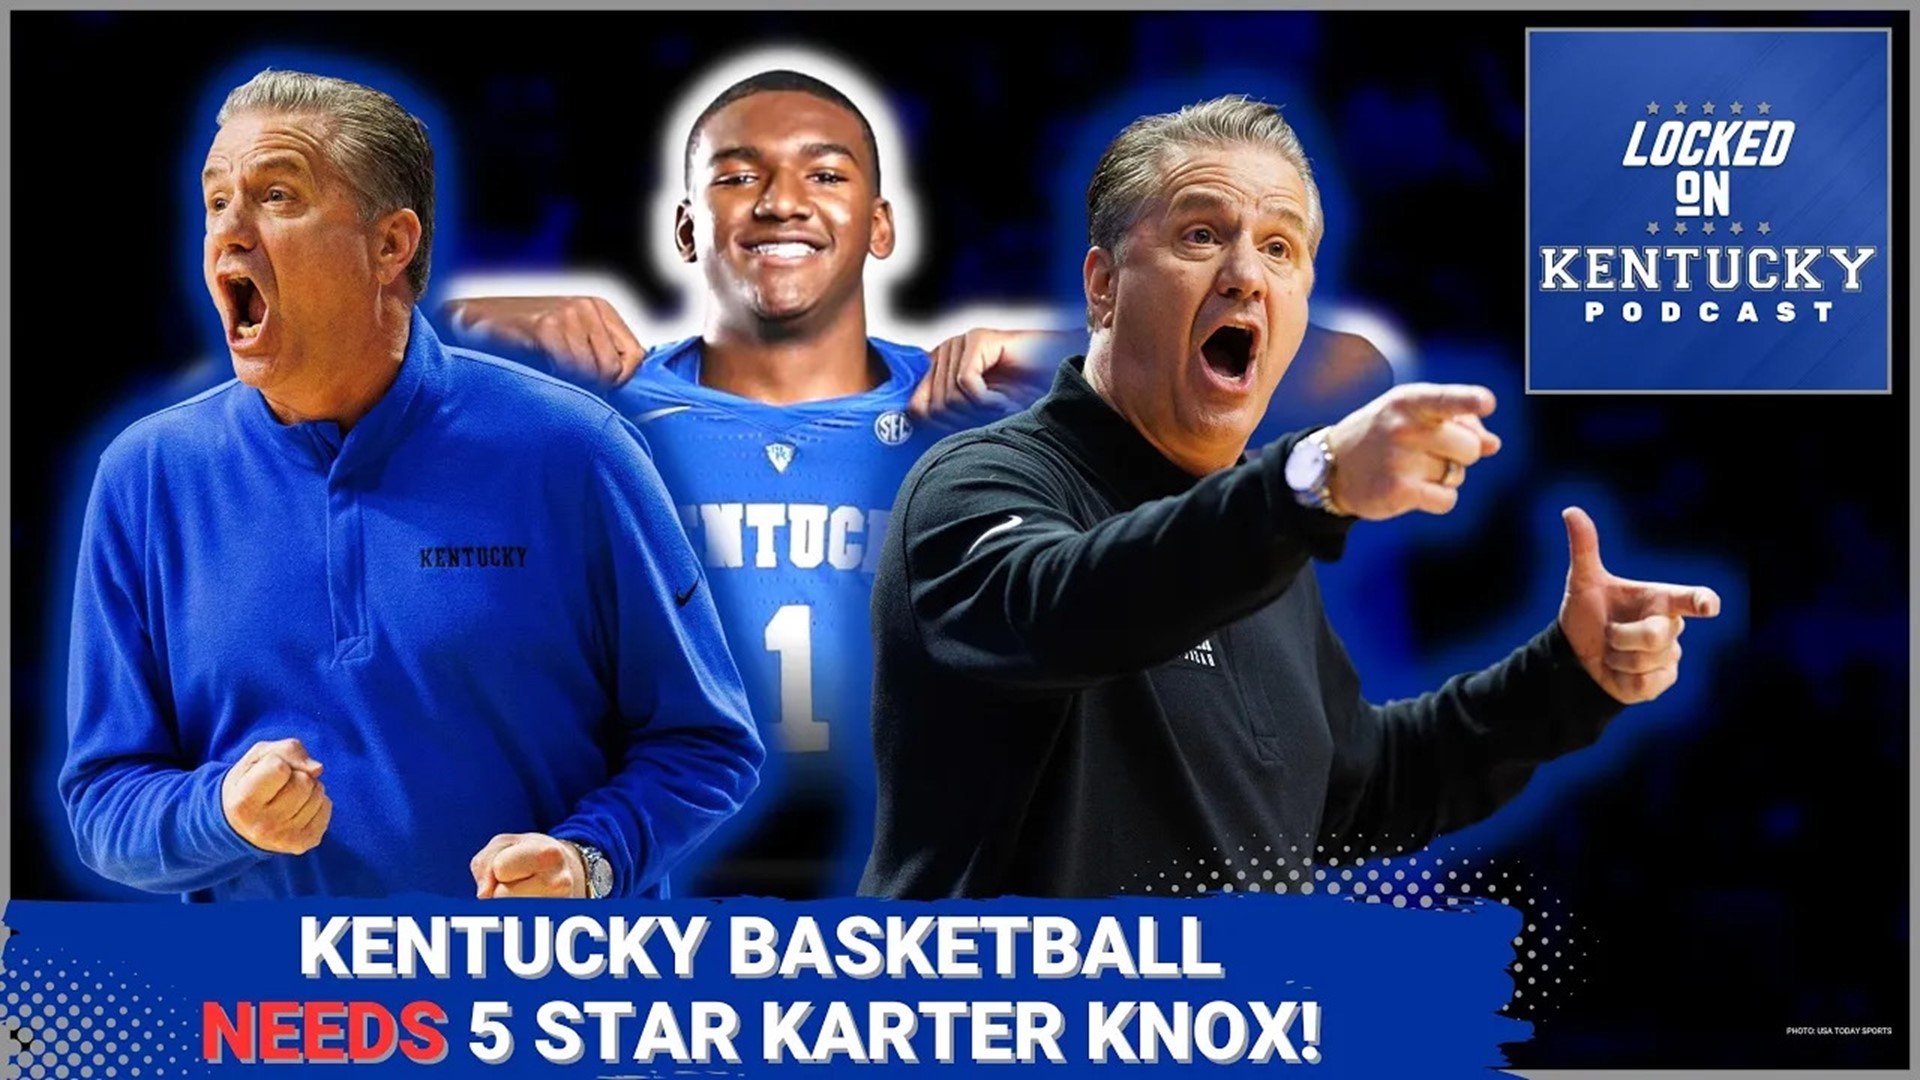 Kentucky basketball is pursuing Karter Knox hard.